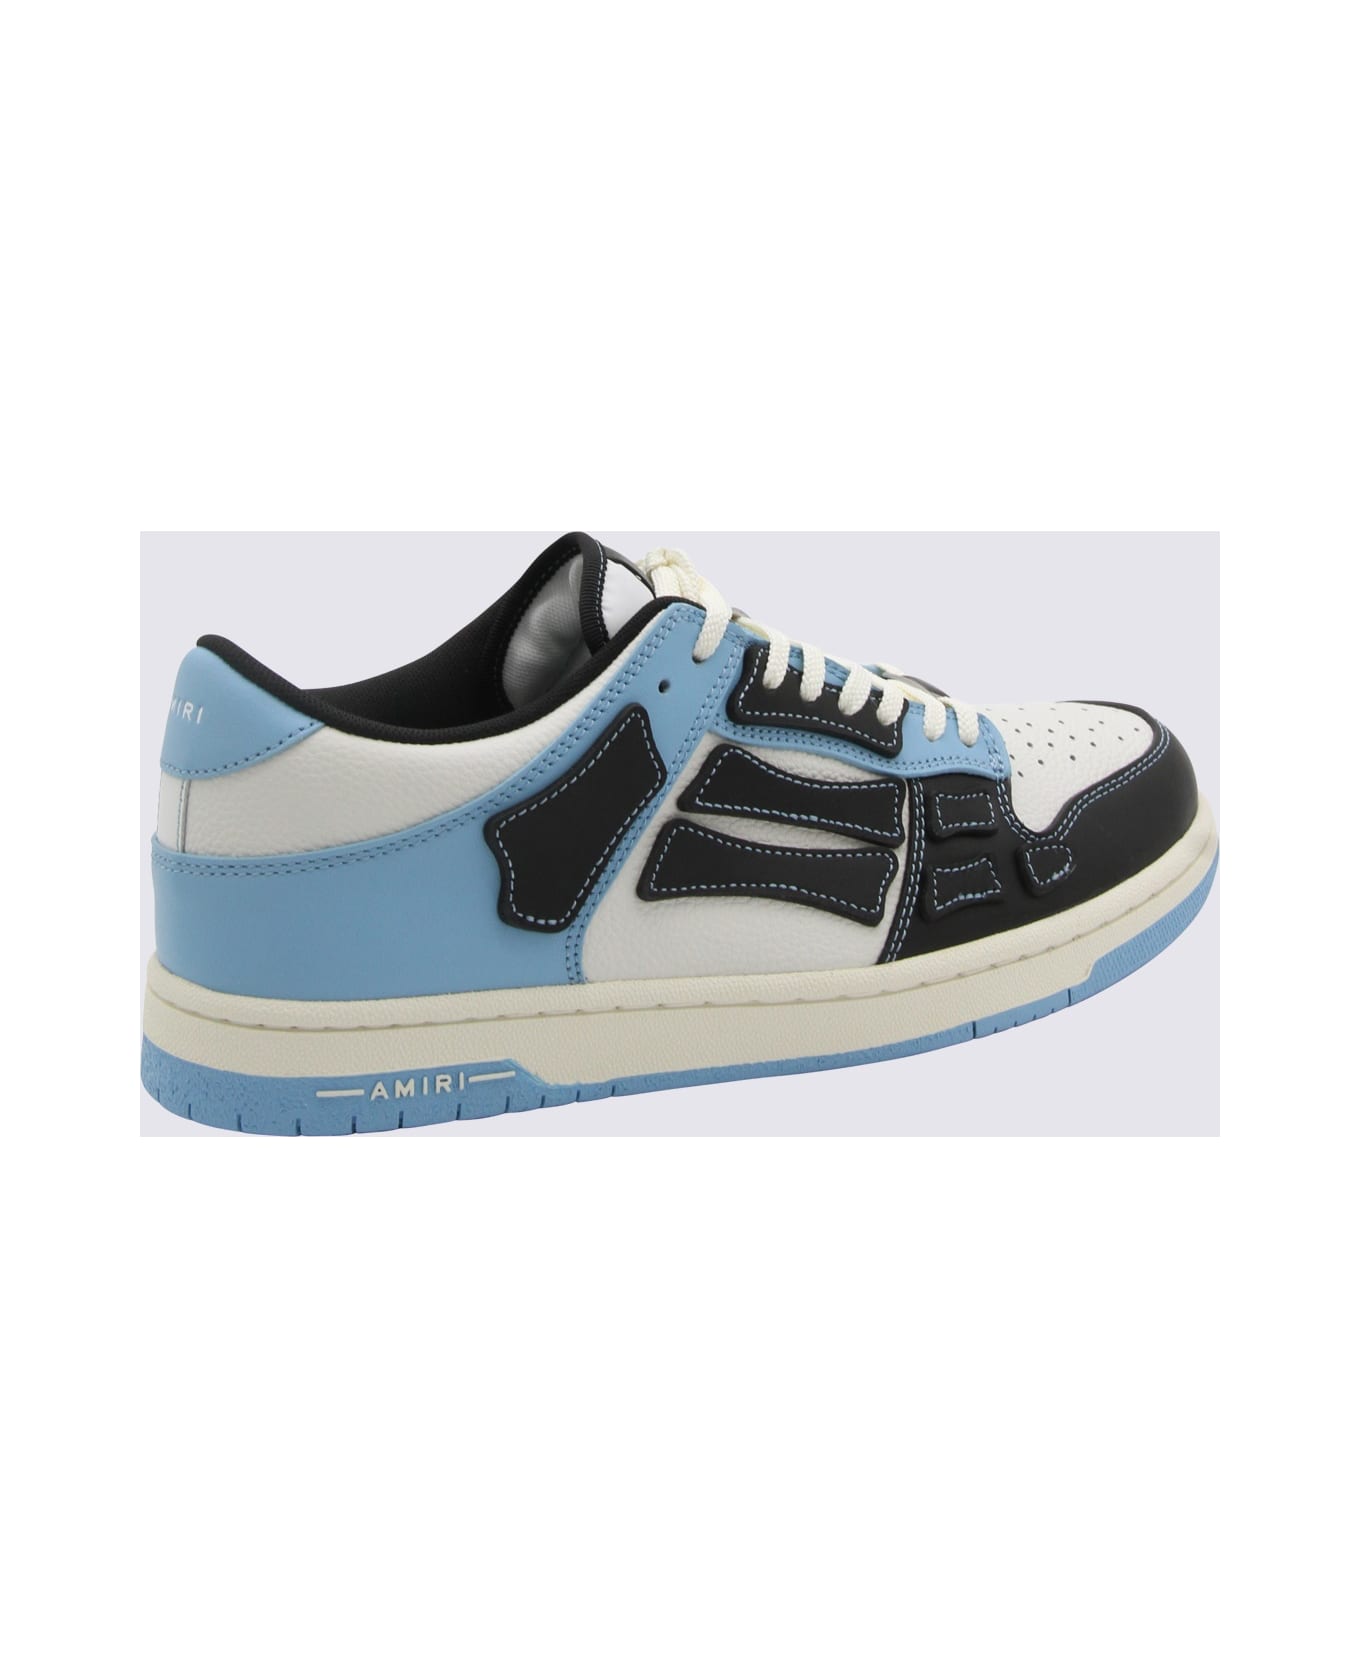 AMIRI Blue Leather Sneakers - Air Blue スニーカー